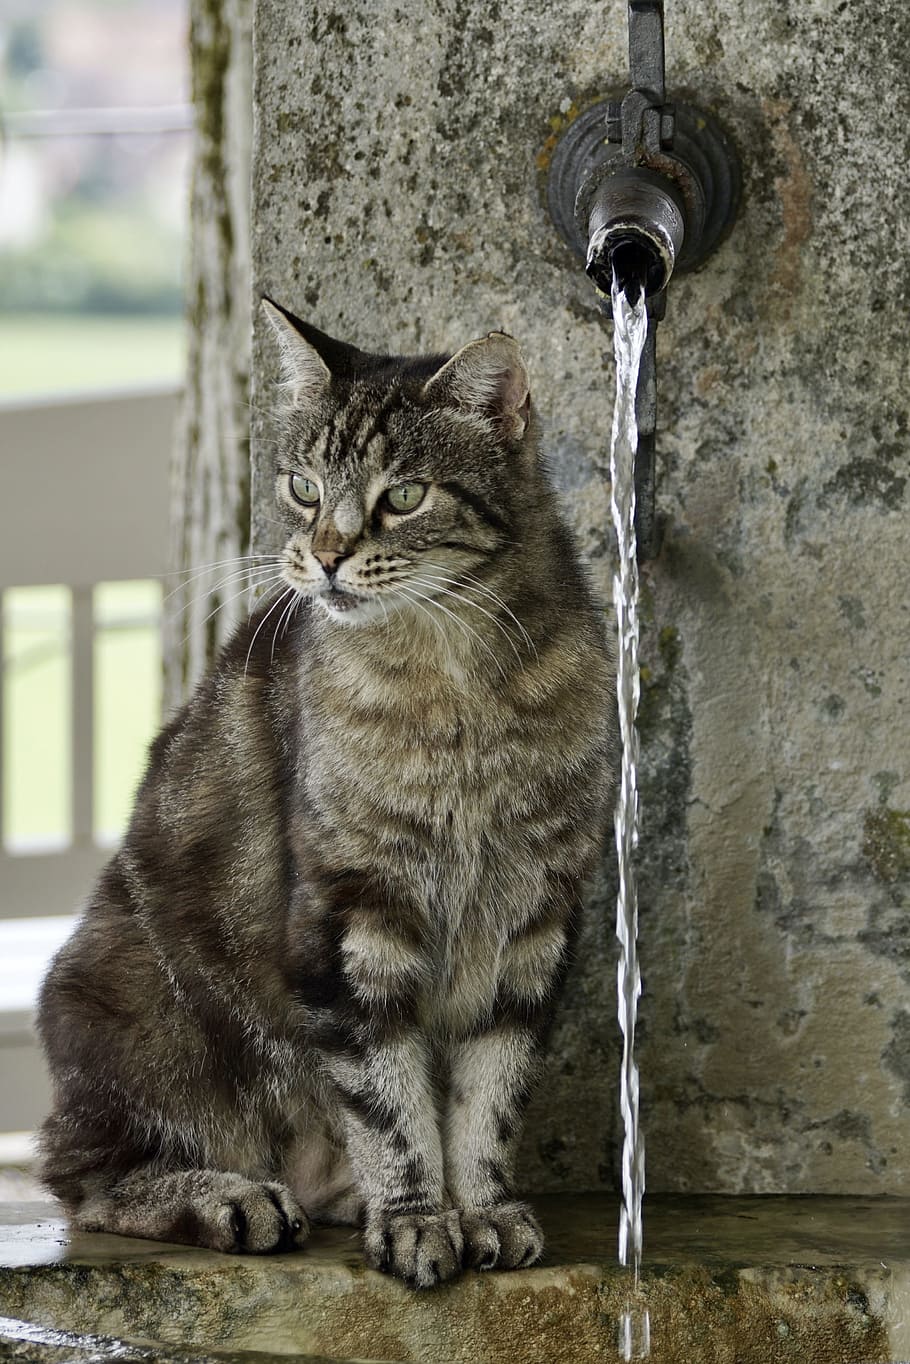 brown tabby cat near faucet, getiegert, tiger, fur, cute, eyes